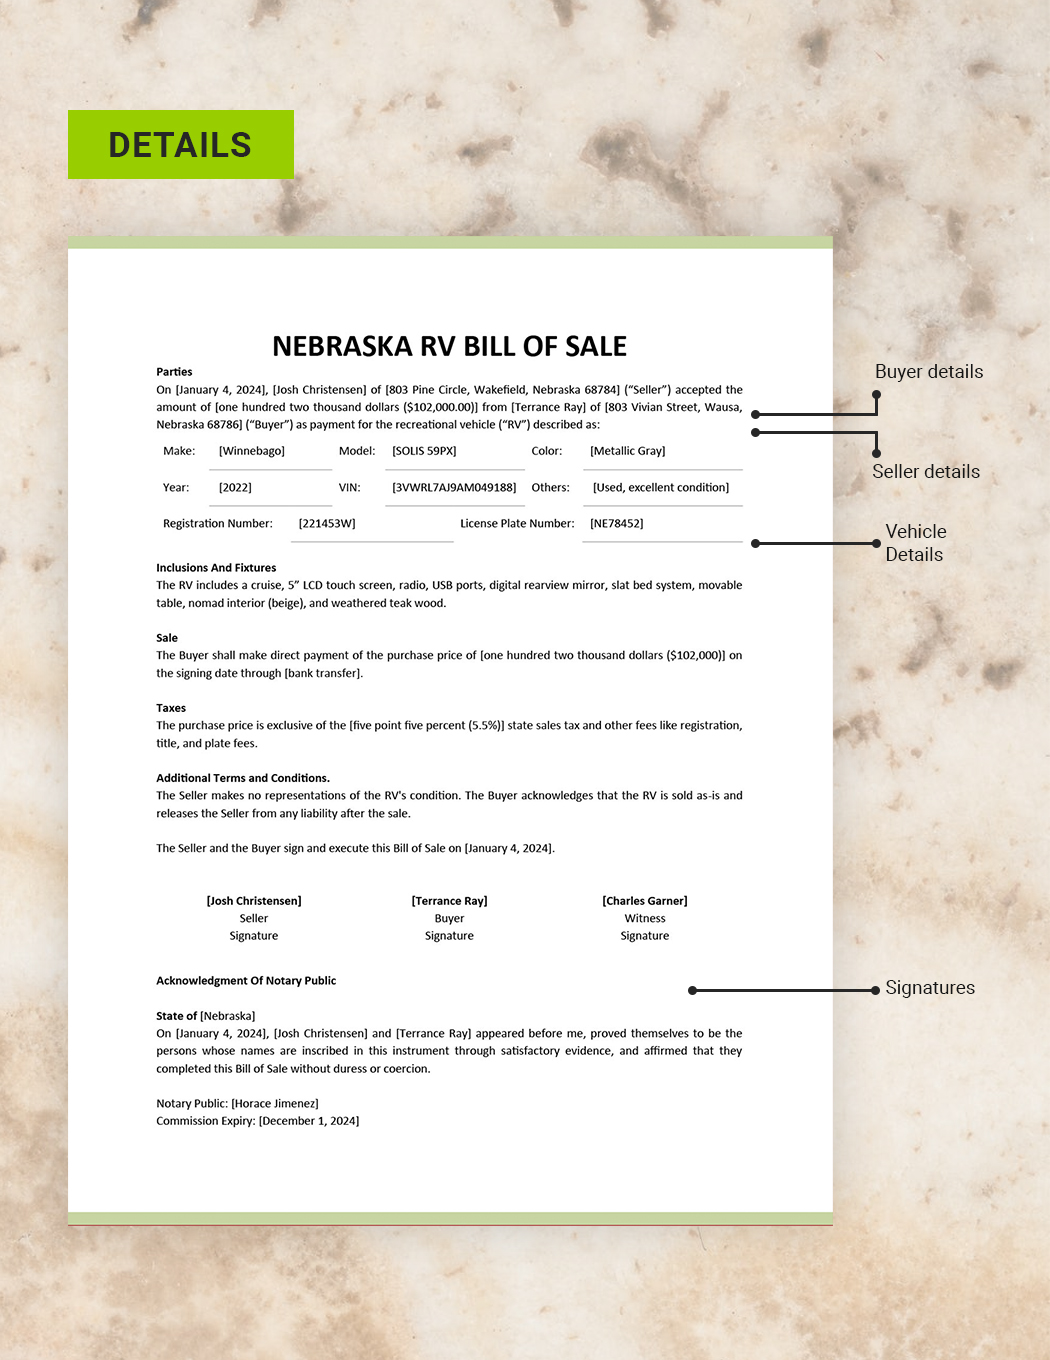 Nebraska RV Bill of Sale Template